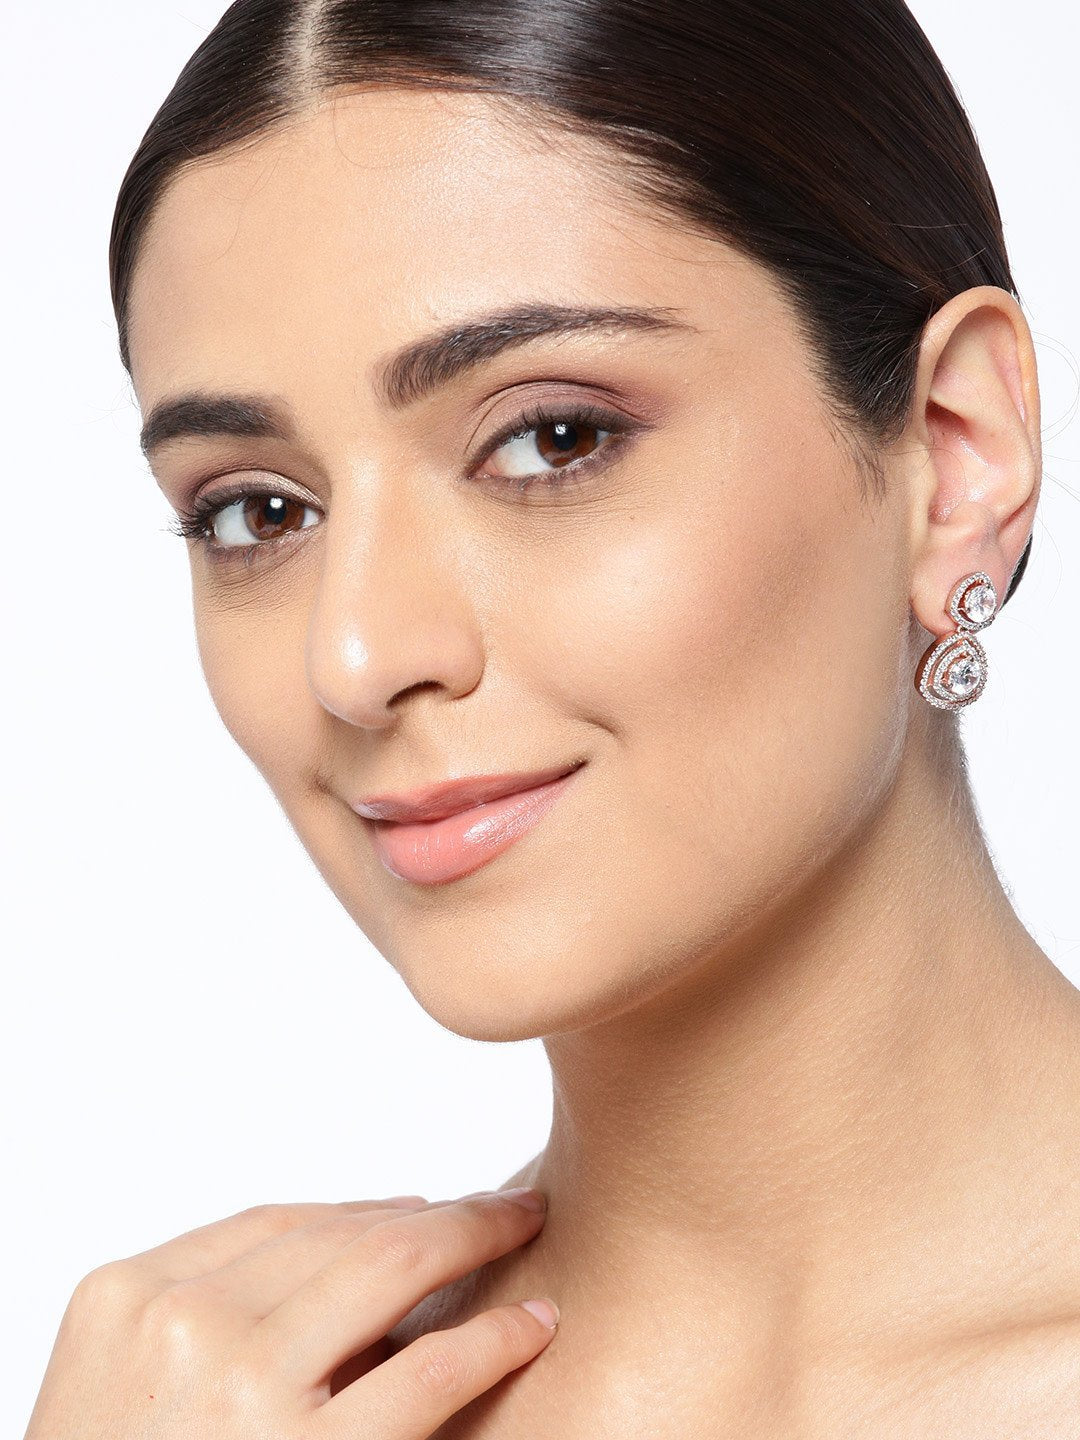 Women's Rose Gold-Plated American Diamond Studded Drop Earrings - Priyaasi